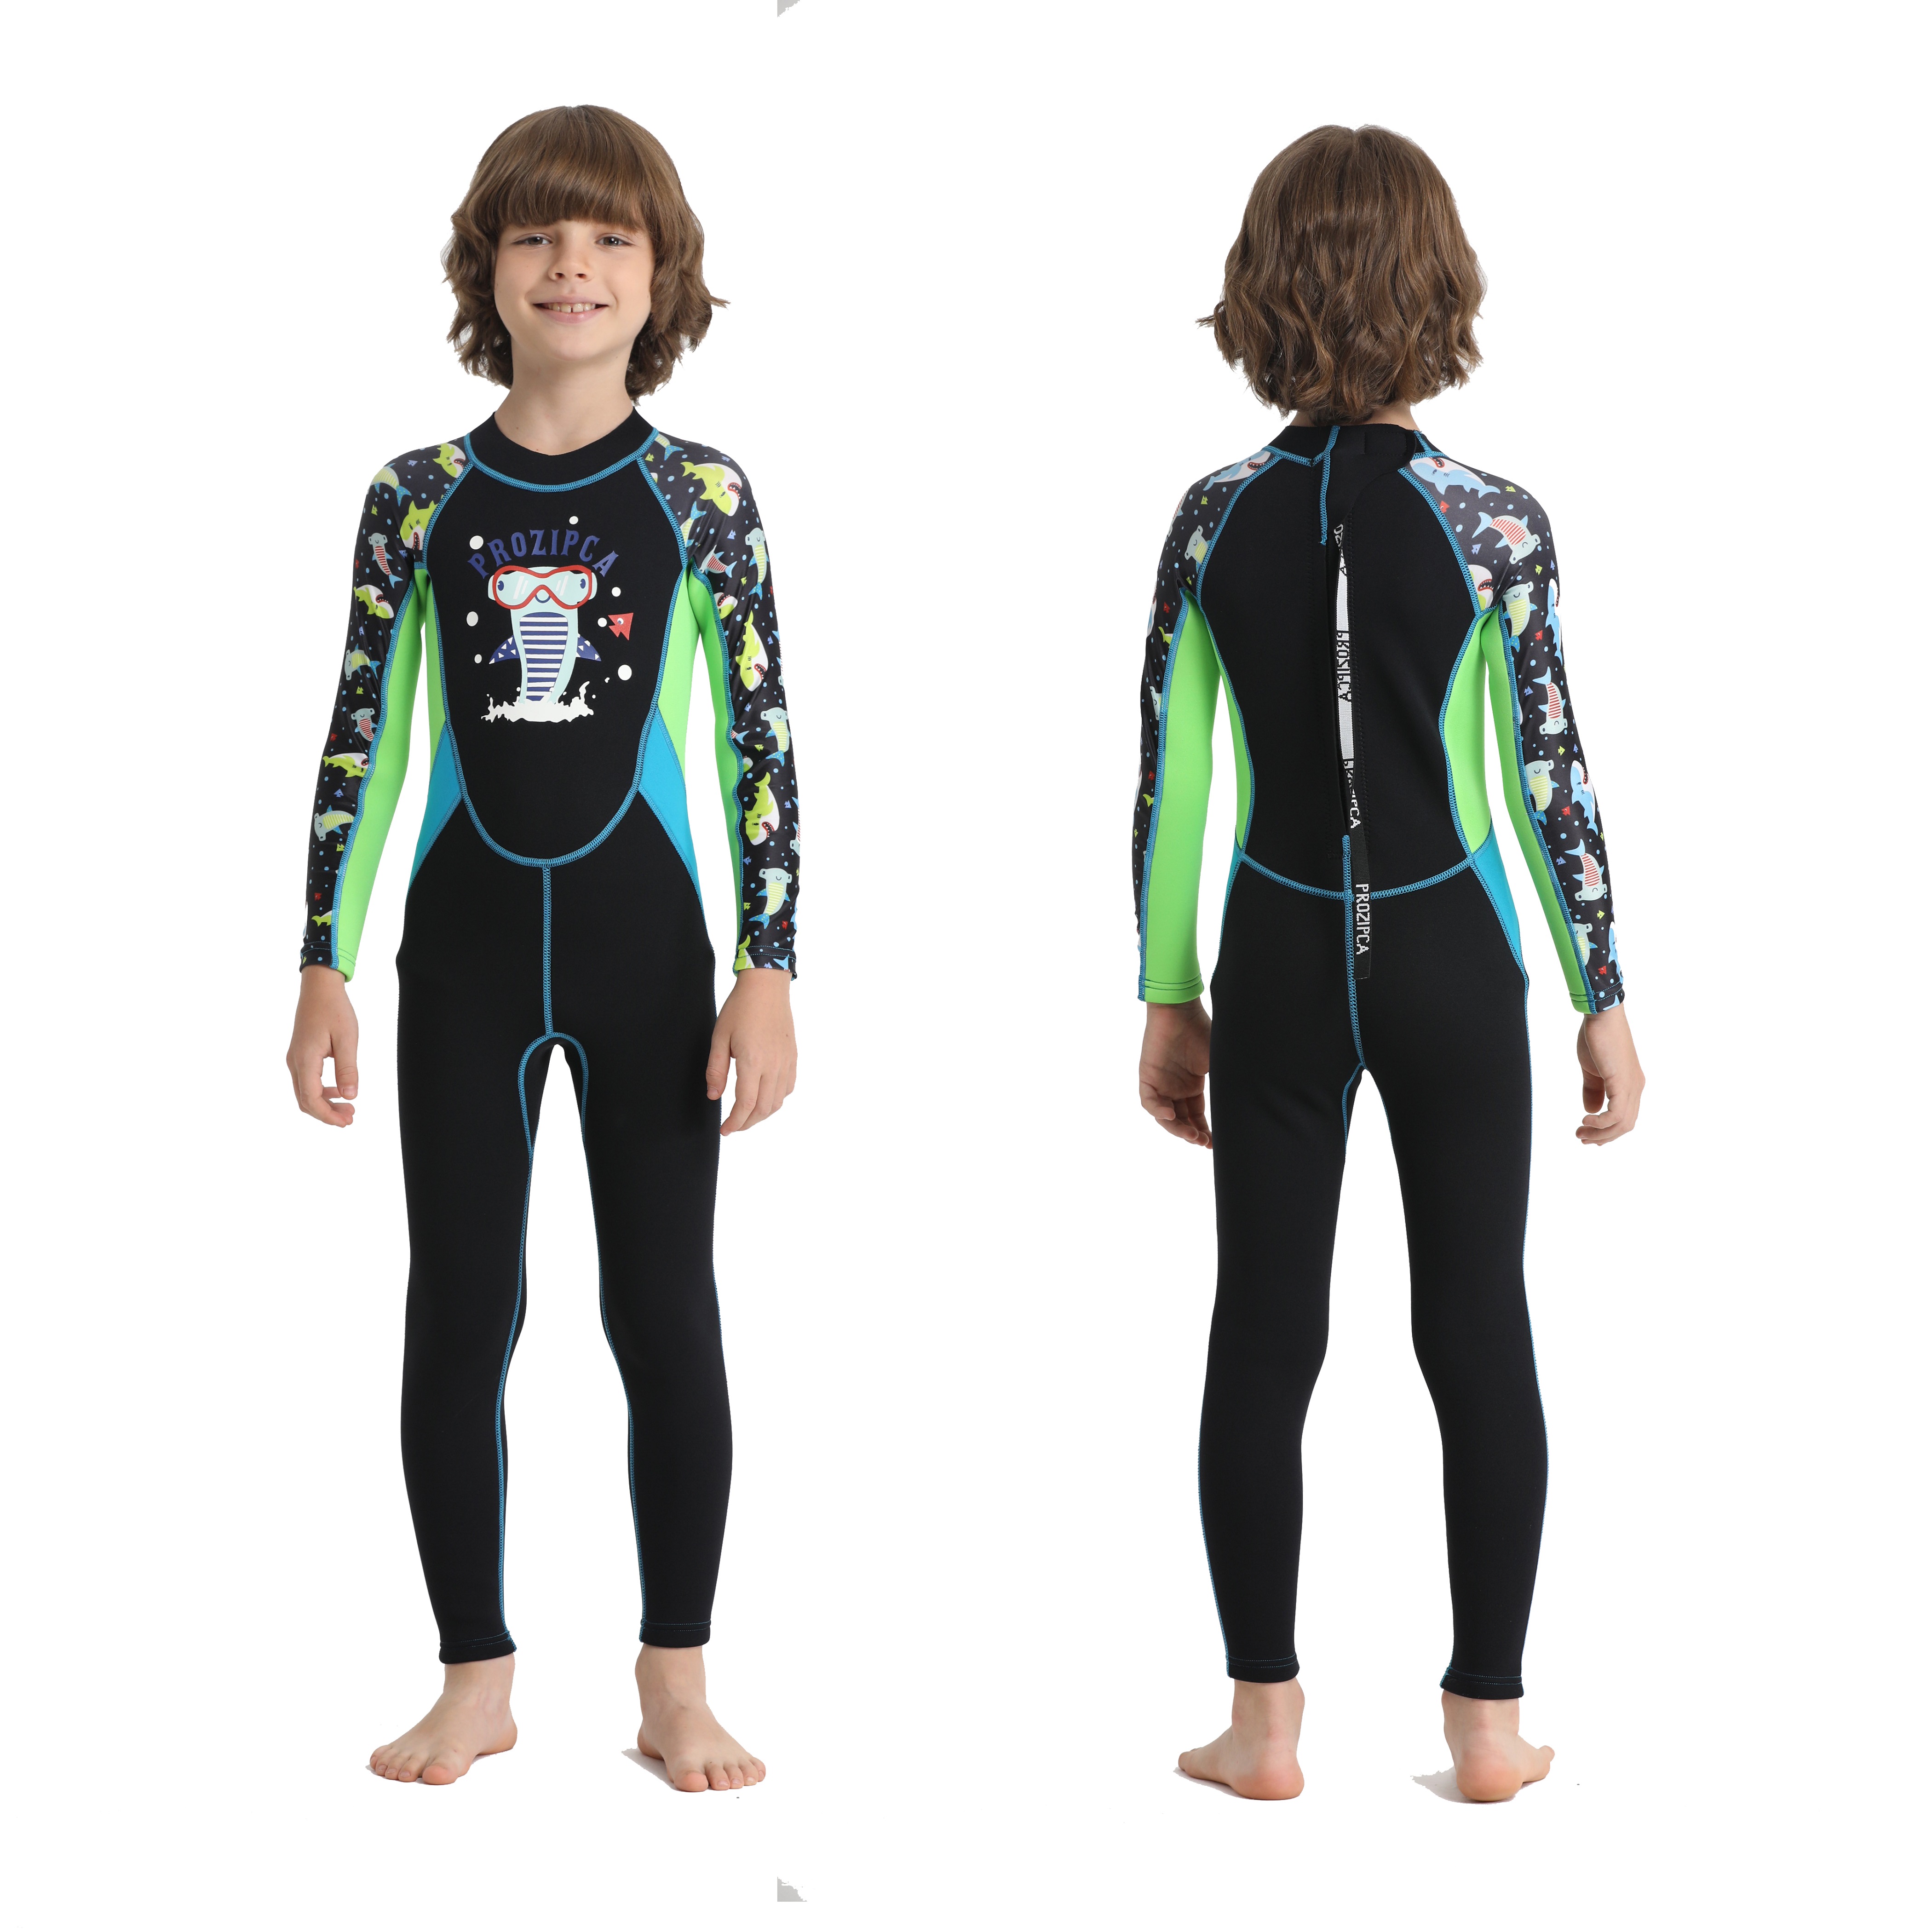 Customized Swimming Snorkeling Suits Children Long Sleeve Trousers Back Zip 3Mm Neoprene Kids Surfing Wetsuit Boys